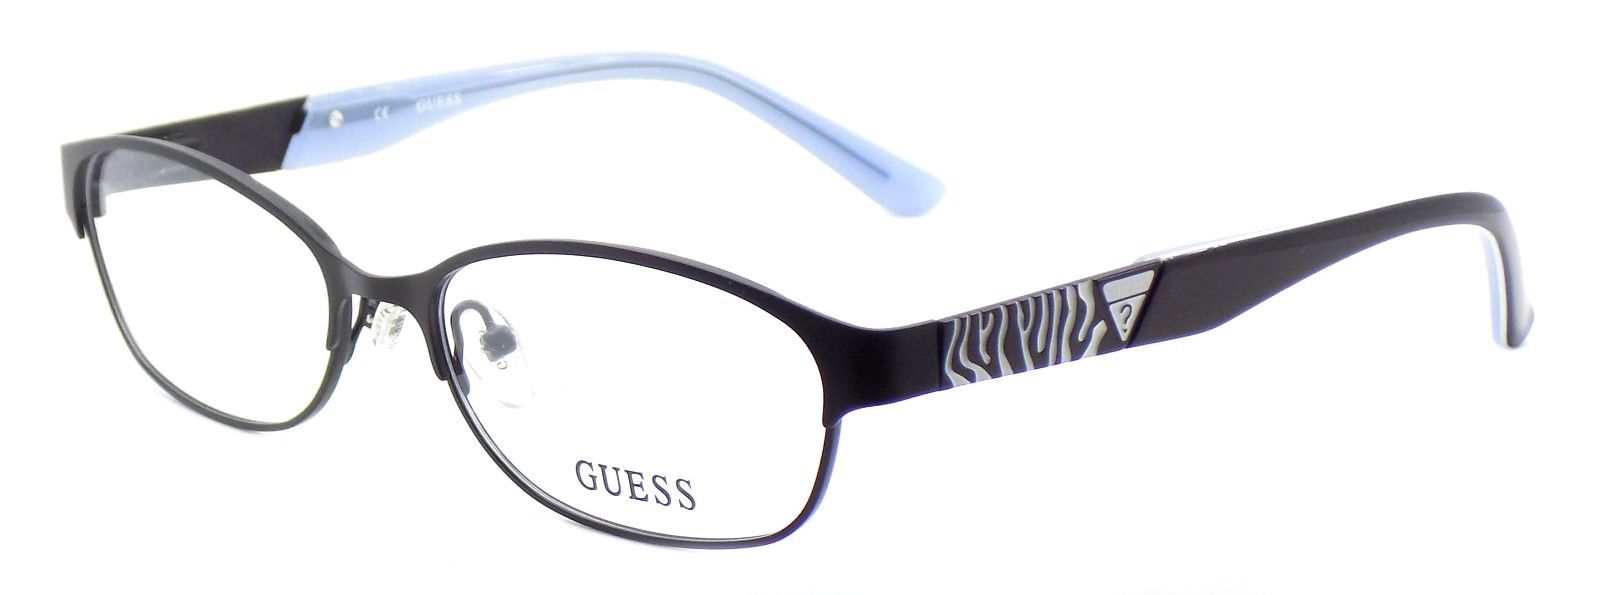 1-GUESS GU2353 BLK Women's Eyeglasses Frames 53-16-135 Black + CASE-715583650985-IKSpecs